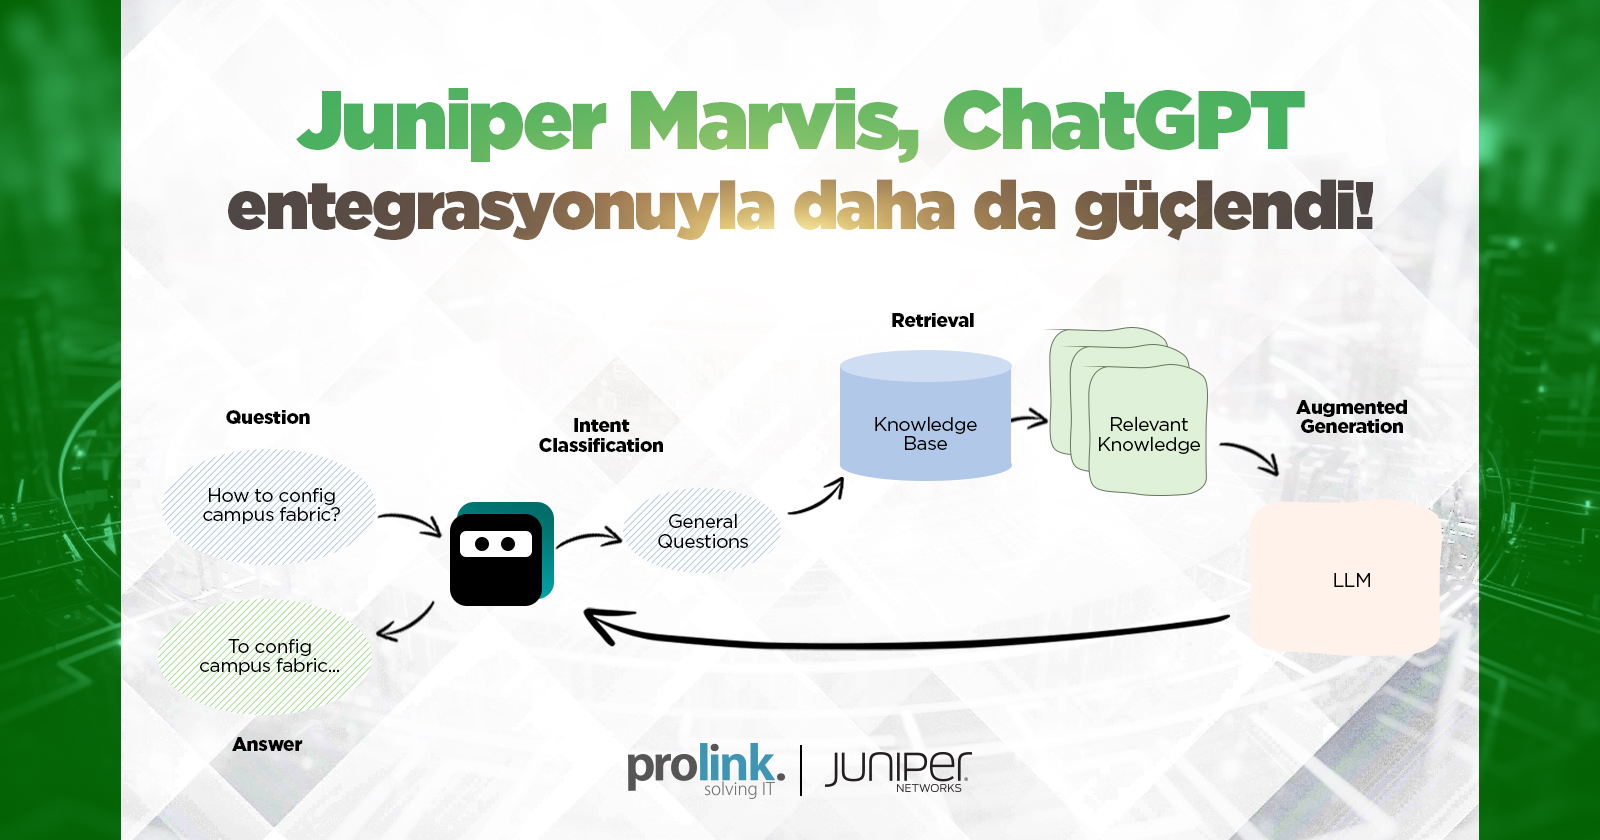 Marvis, Juniper's Virtual Network Assistant